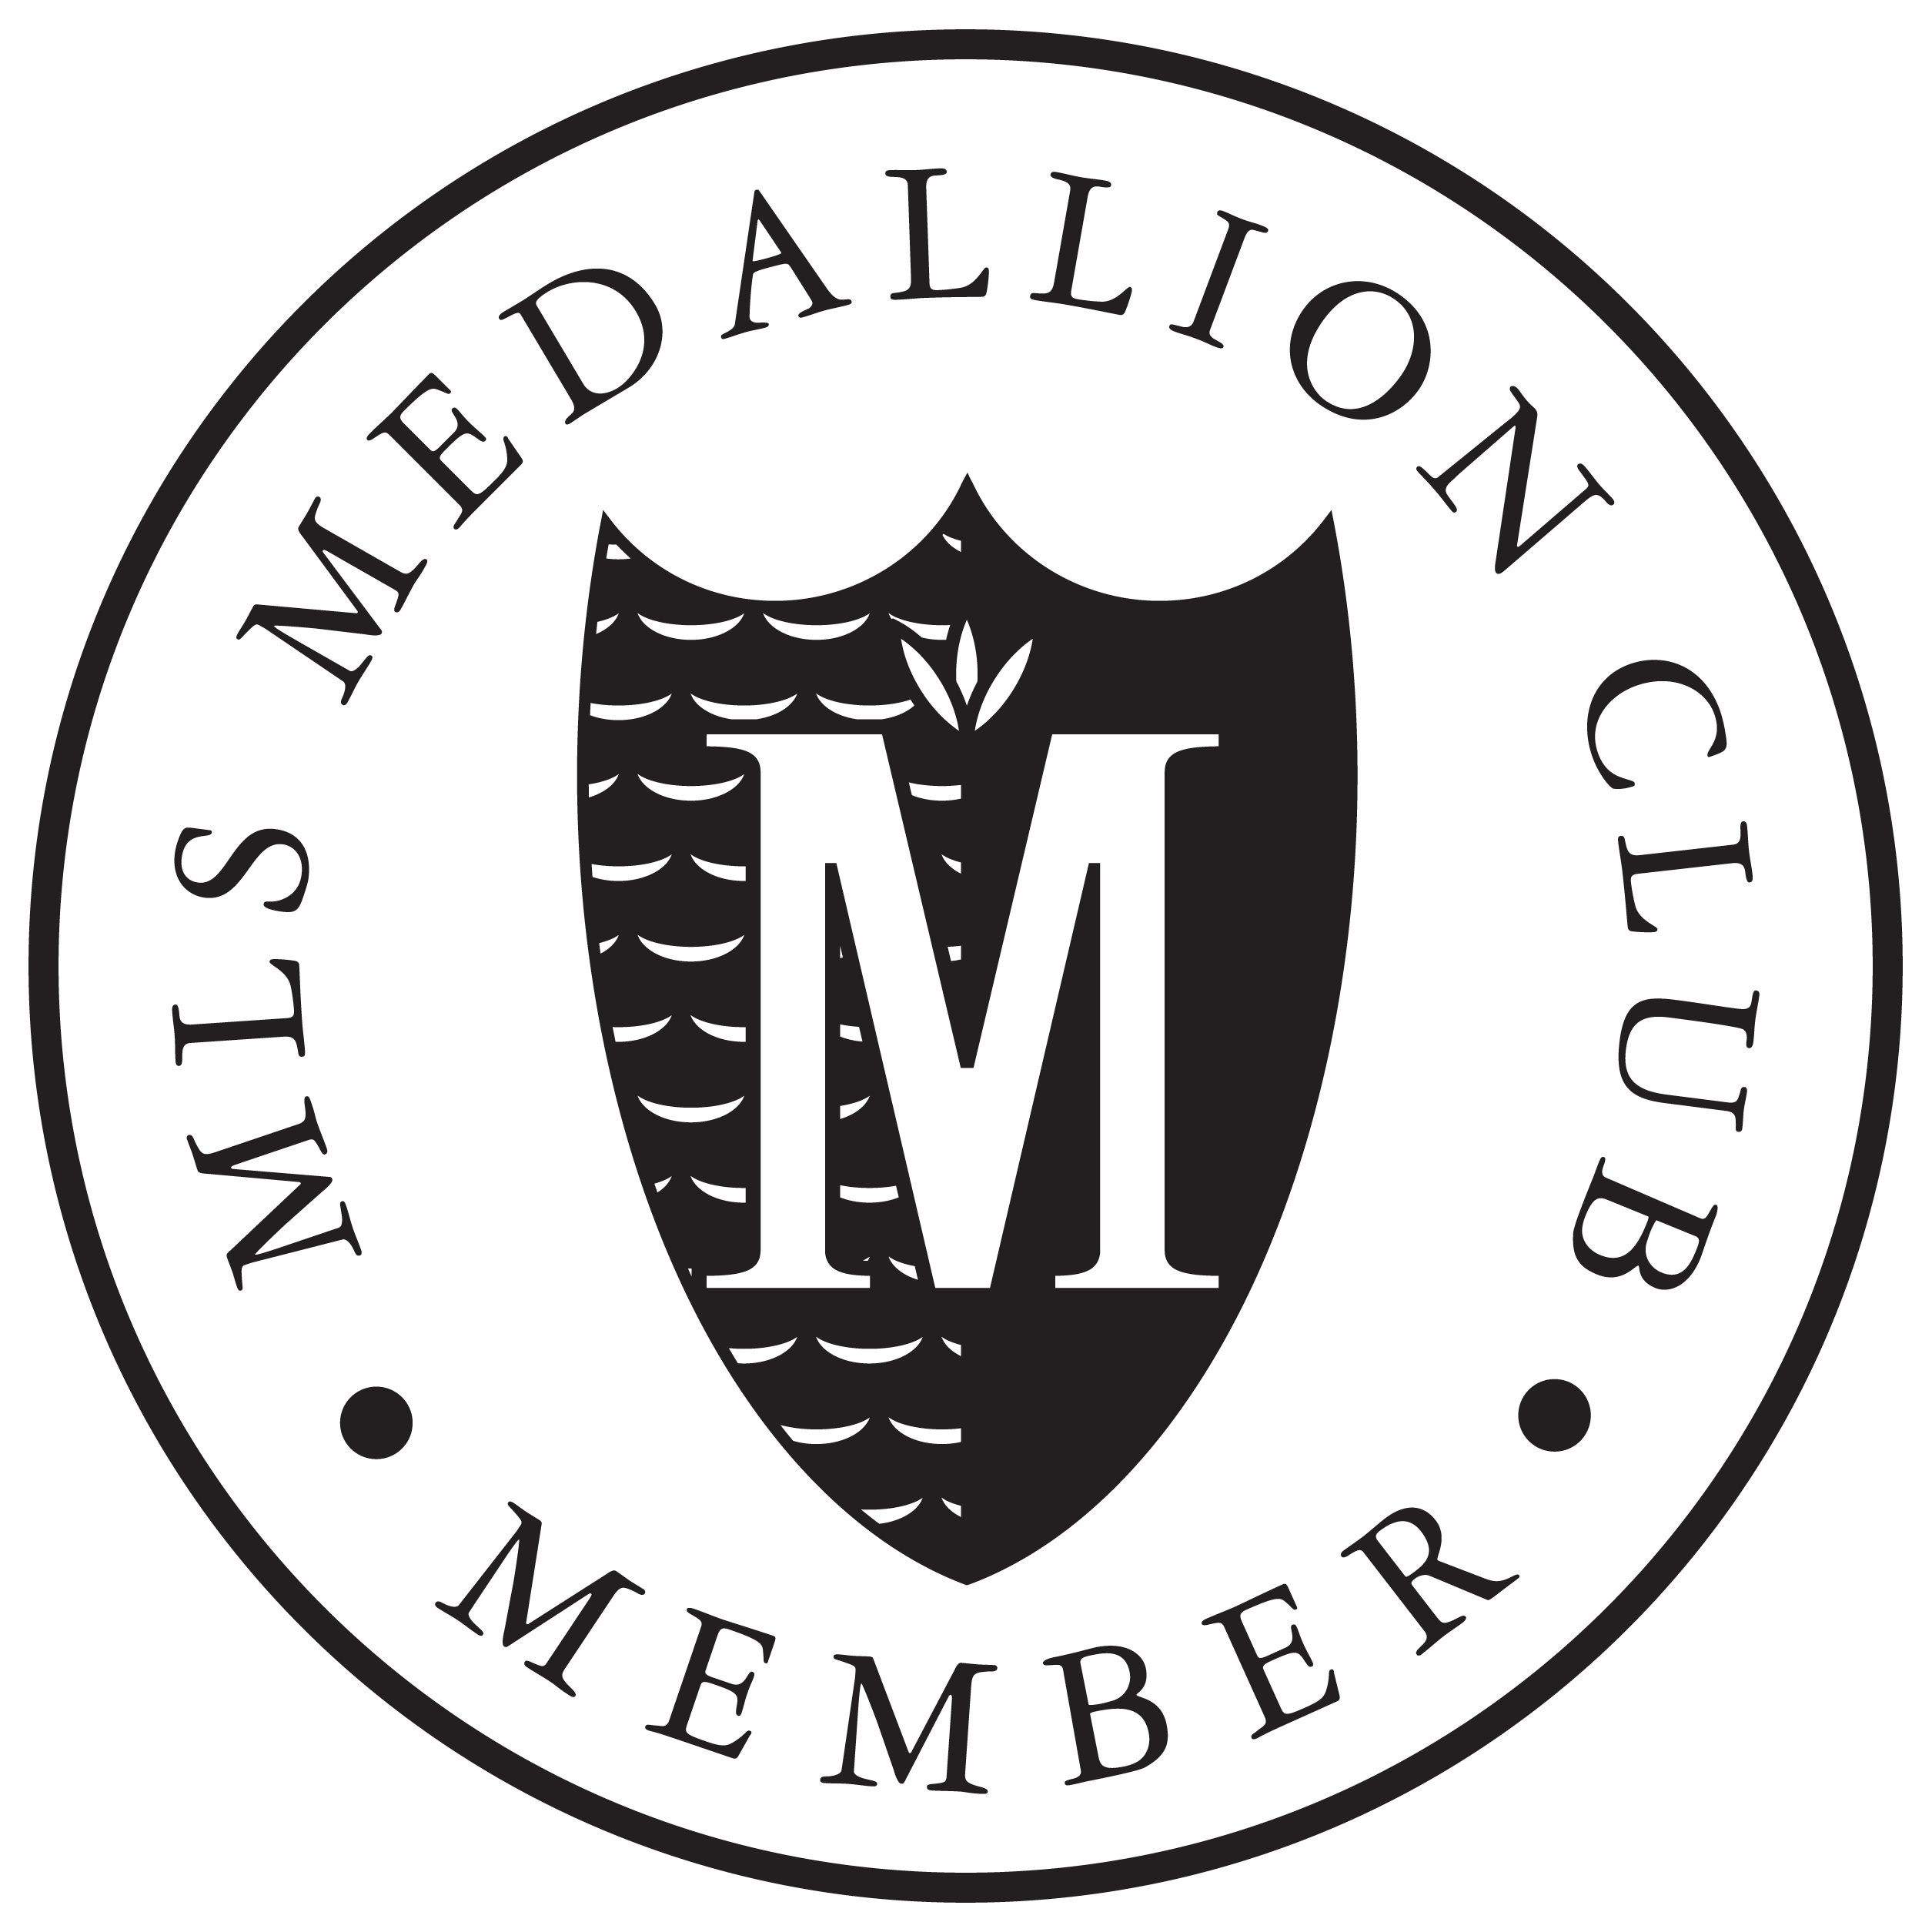 Medallion Club Member